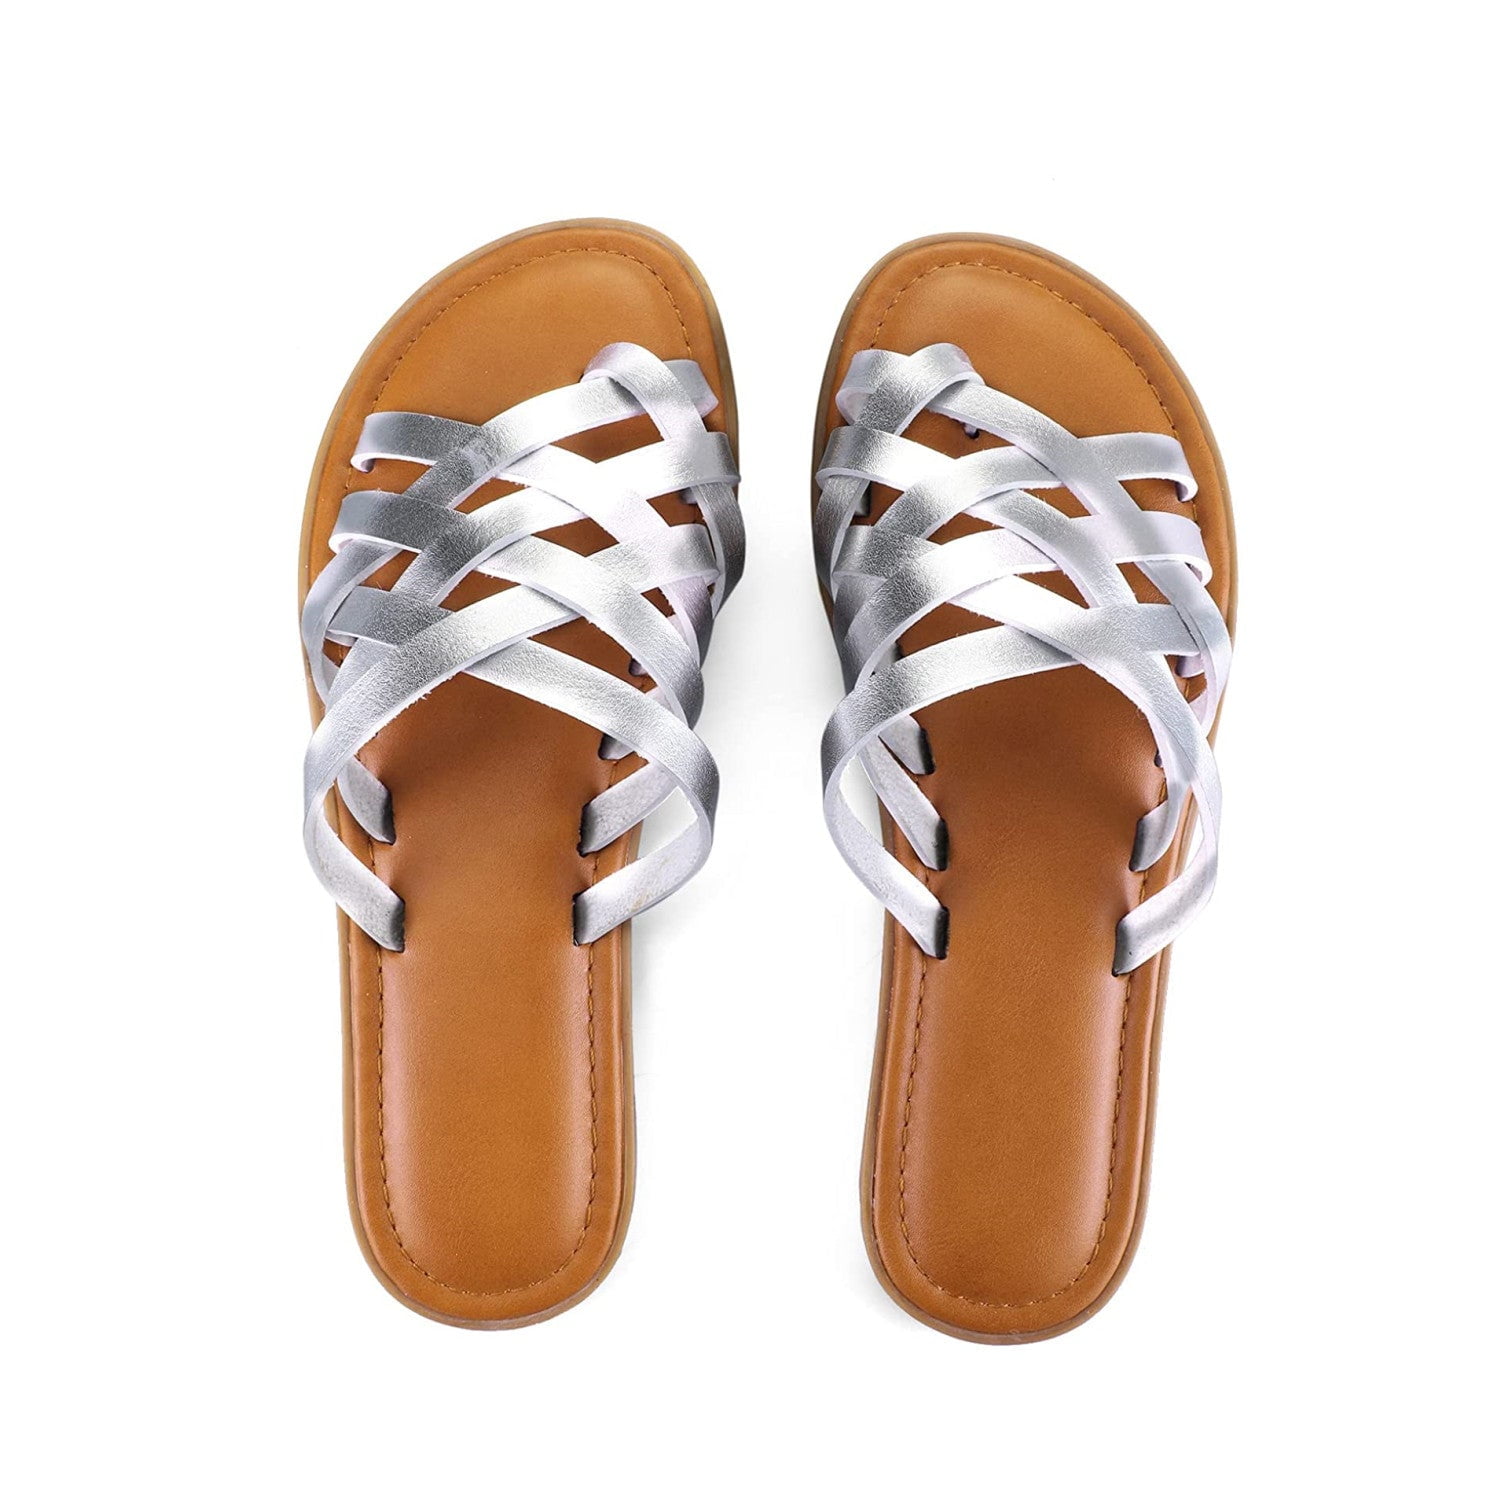 Mysoft Women Strappy Slippers Summer Grey Flat Sandals Size 7 - Walmart.com